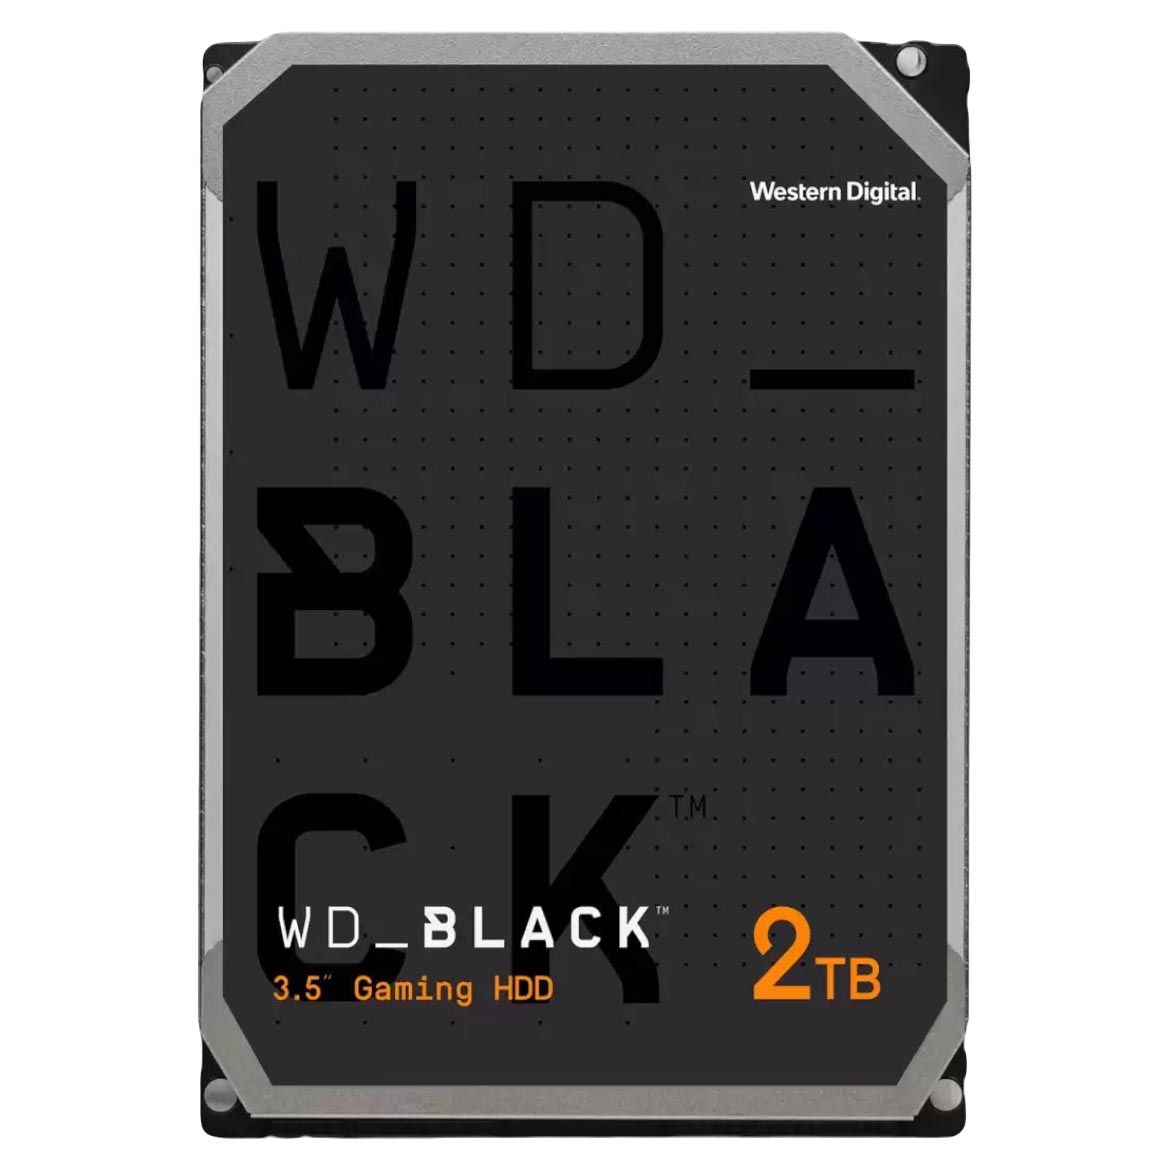 Внутренний жесткий диск Western Digital WD Black Gaming, WD2003FZEX, 2 Тб жесткий диск western digital wd gold 6 тб 3 5 wd6003fryz